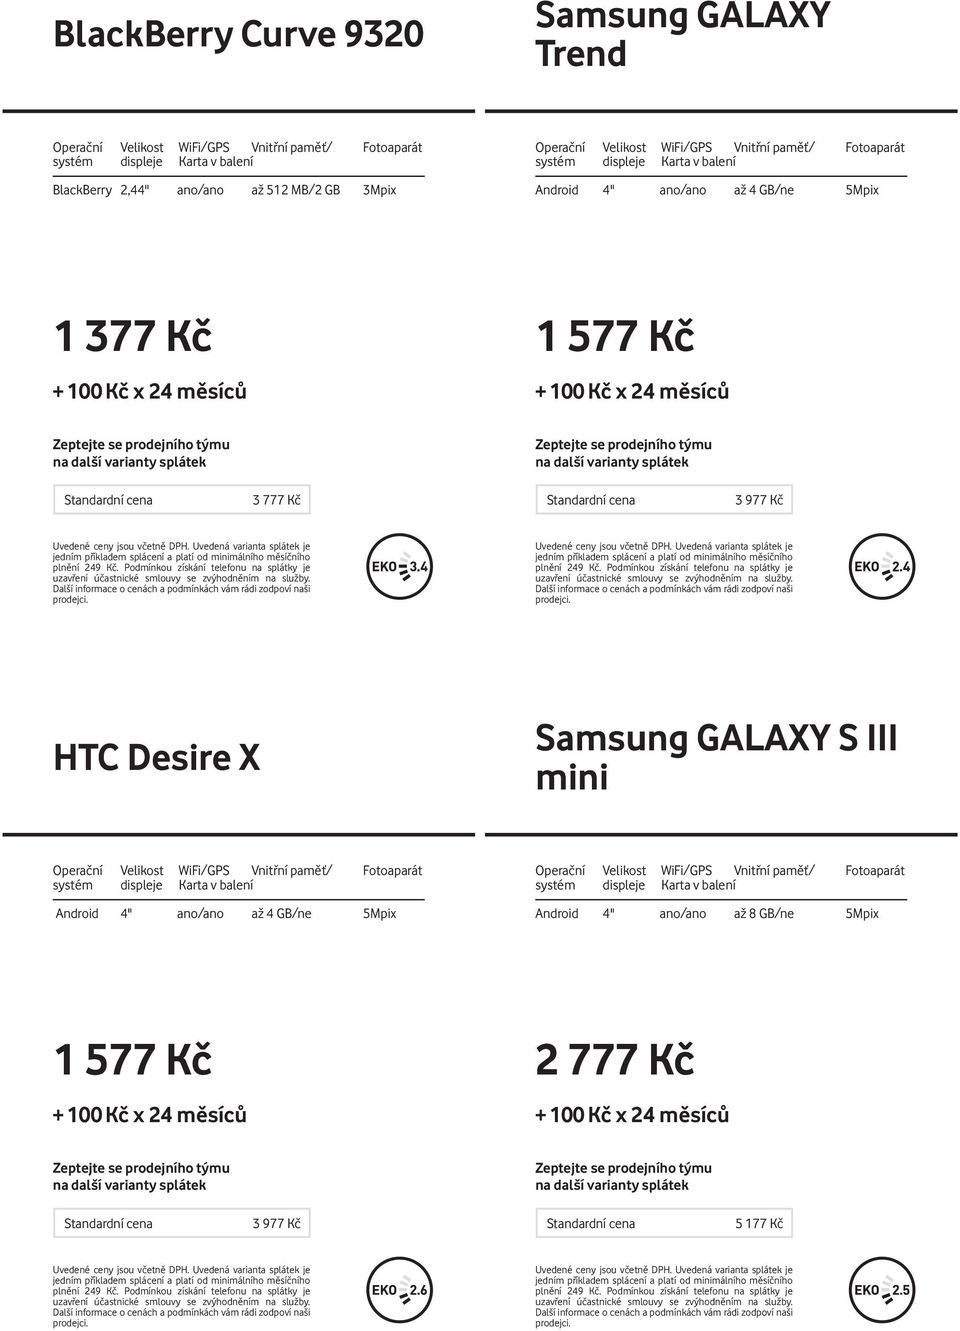 3 1 5 3 7 3 9 HTC Desire X Samsung GALAXY S III mini Android 4"